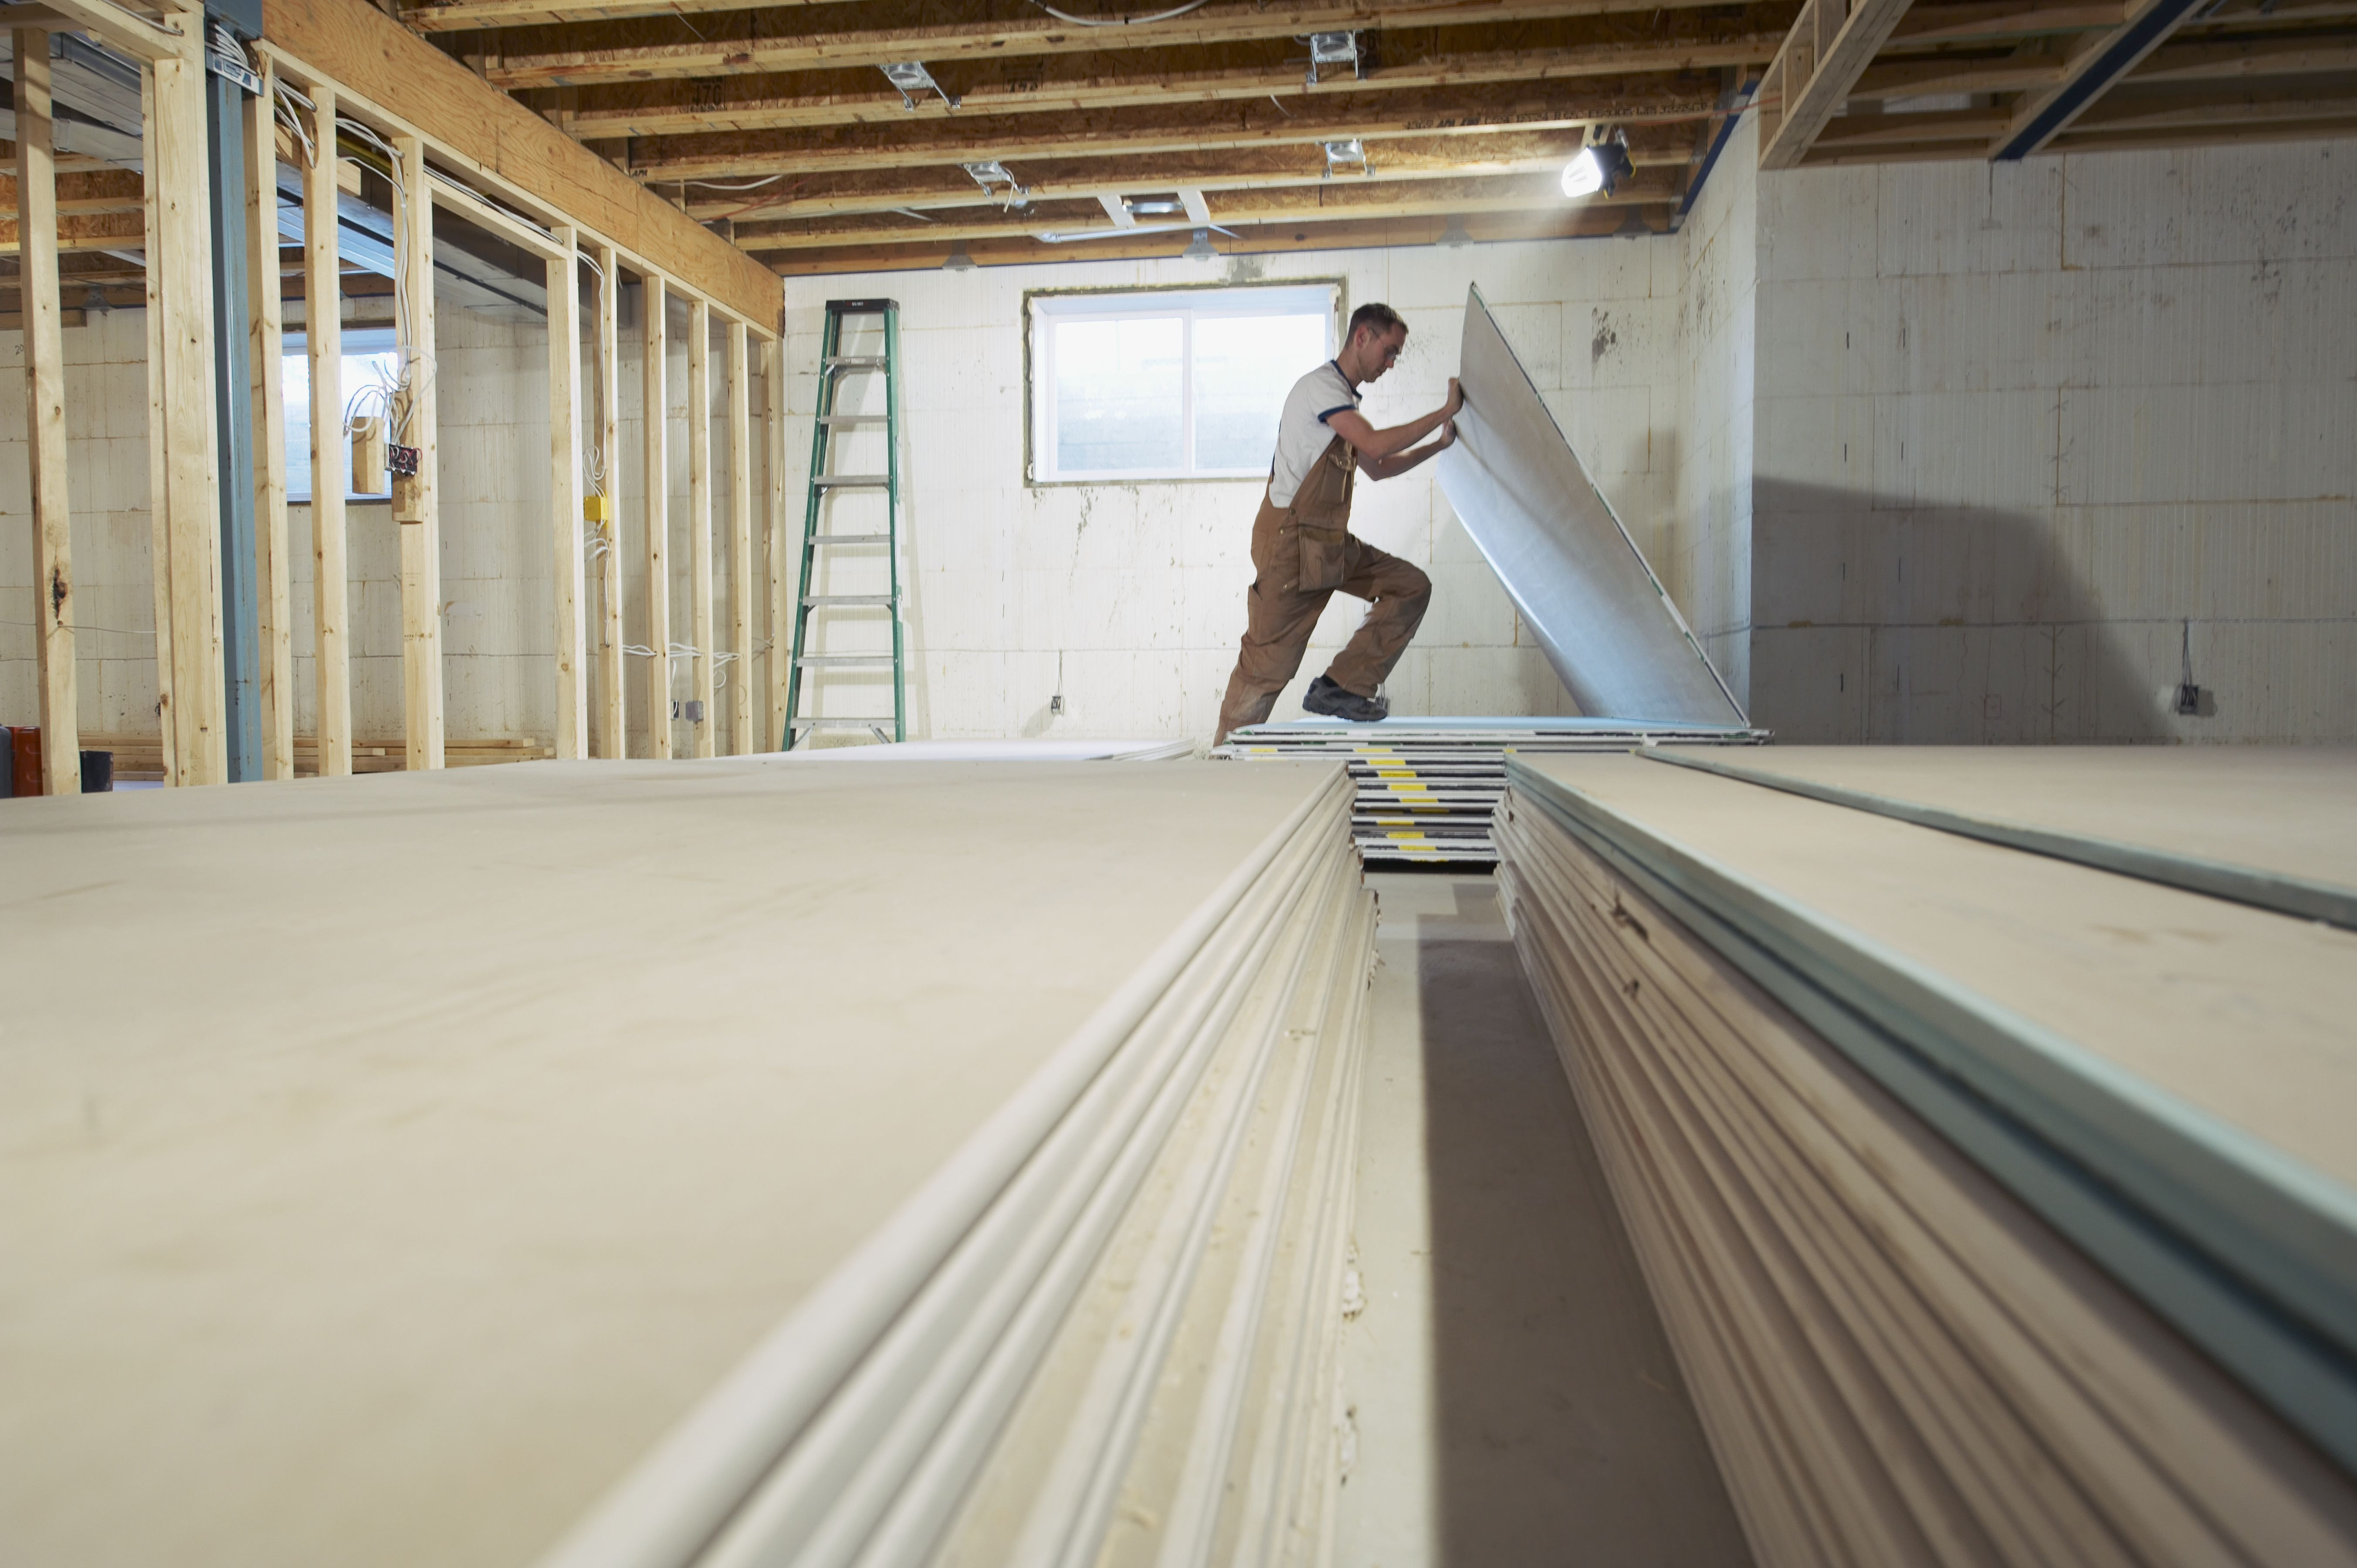 14 Stylish Denver Hardwood Floor Refinishing Cost 2023 free download denver hardwood floor refinishing cost of average basement finishing cost throughout man installing drywall in new house 522951112 5b12da6dba6177003d66594d